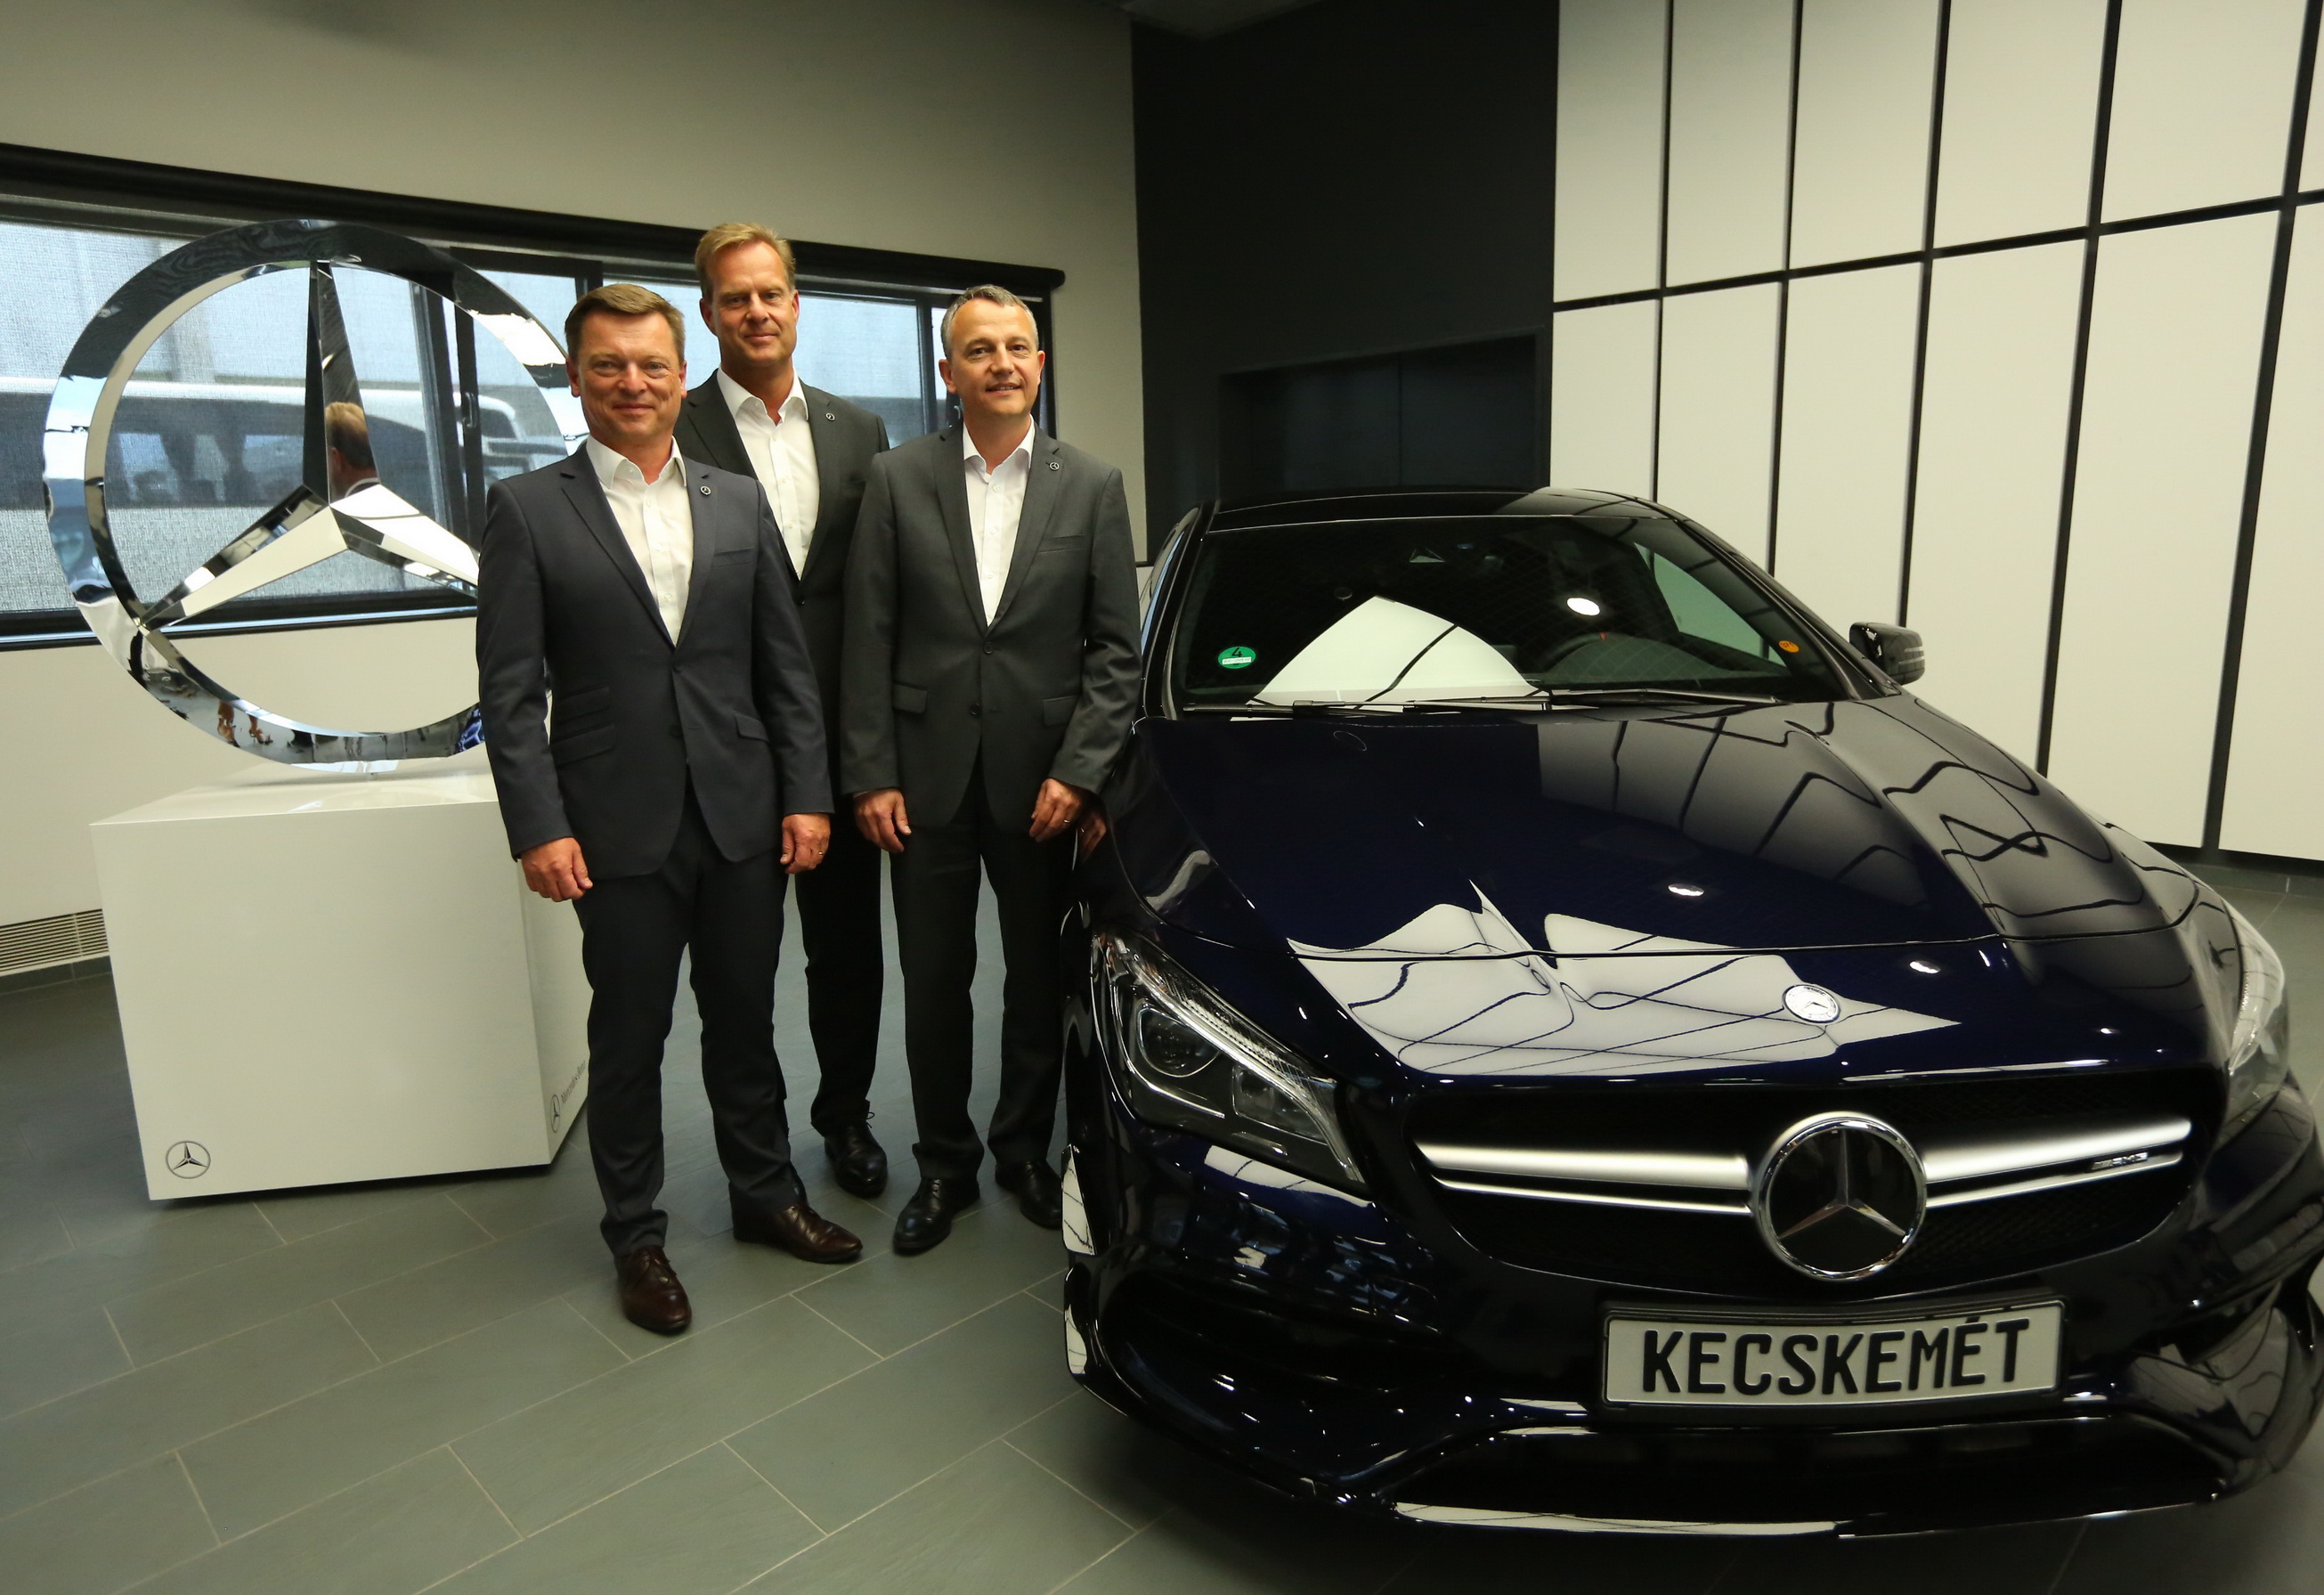 A Mercedes-Benz Manufacturing Hungary Kft. rekorderedményt ért el 2015-ben